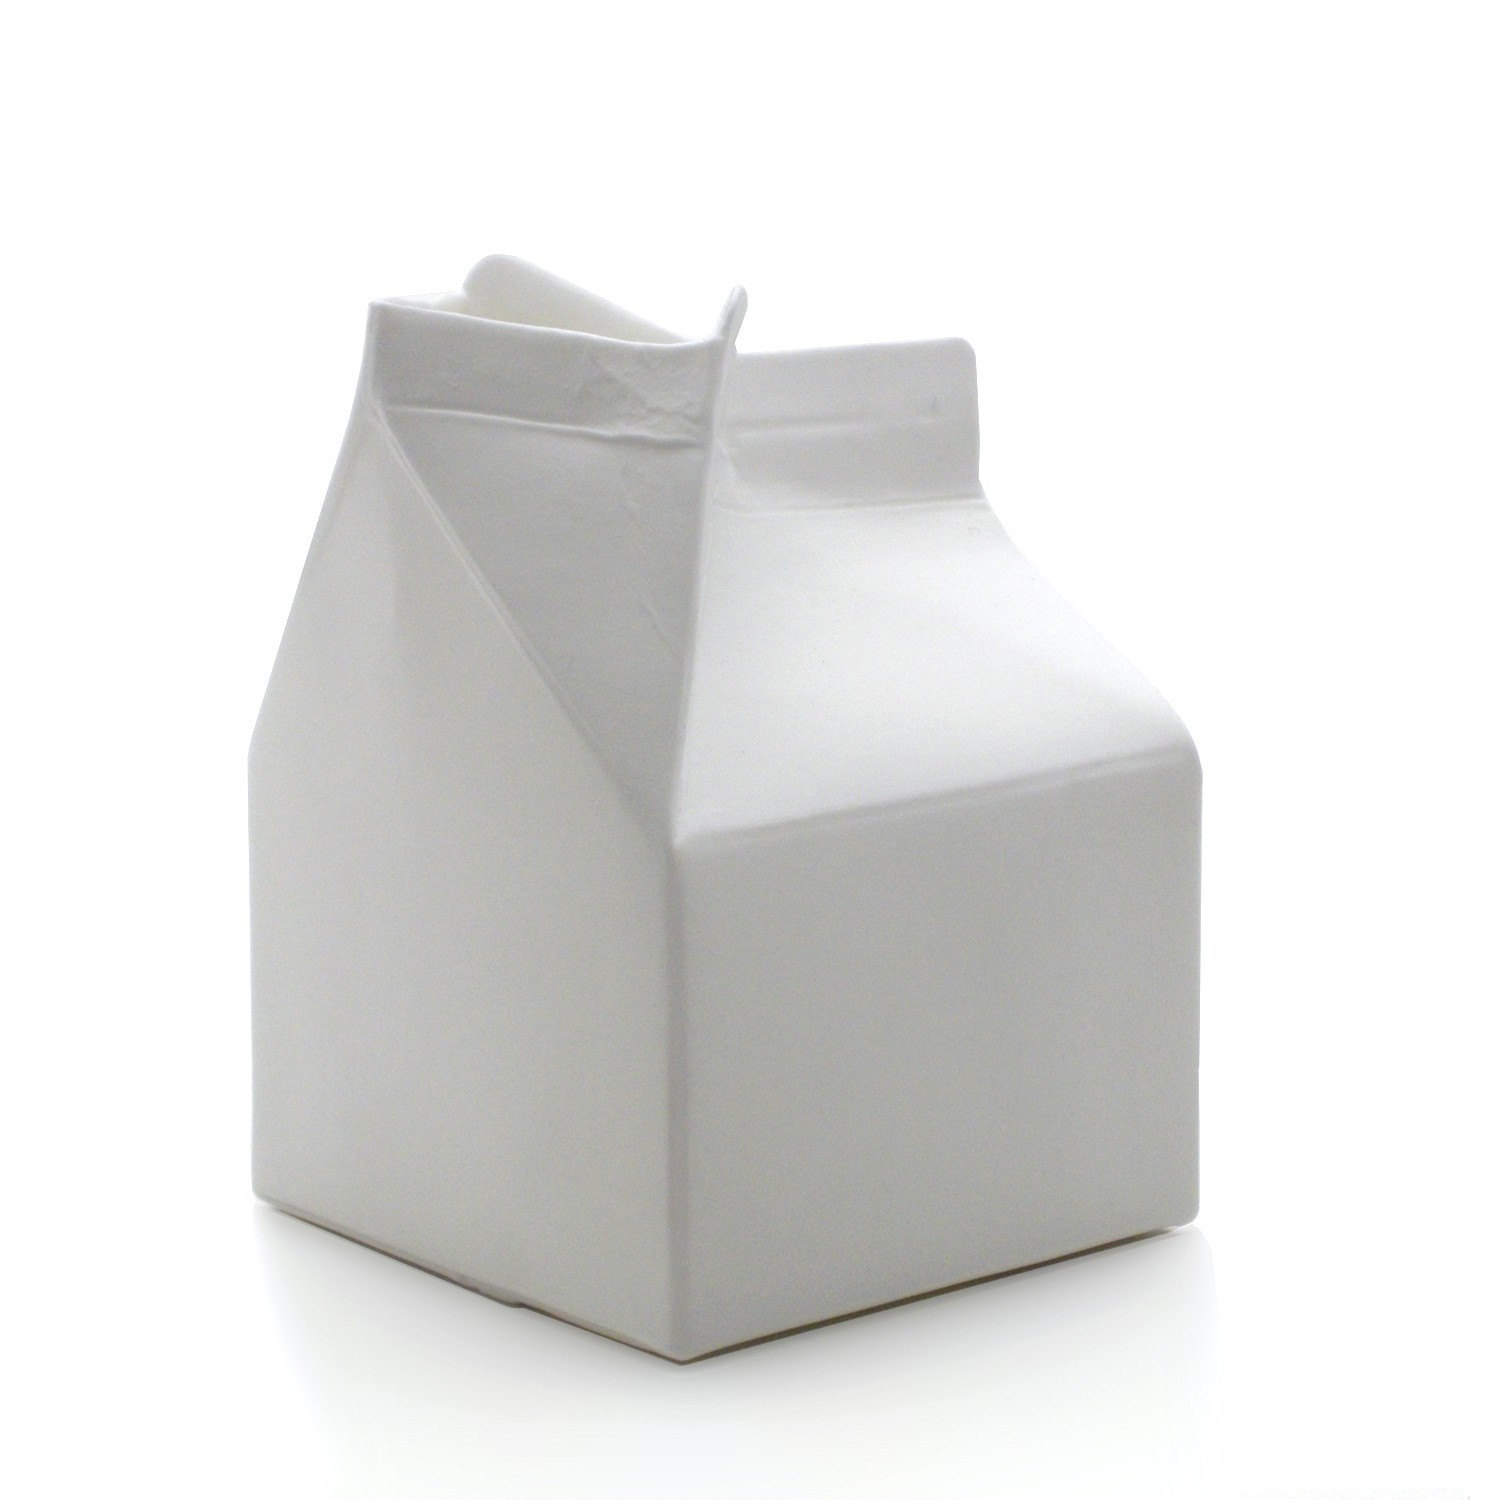 Custom order Ruth Small milk carton by ricochetstudio on Etsy